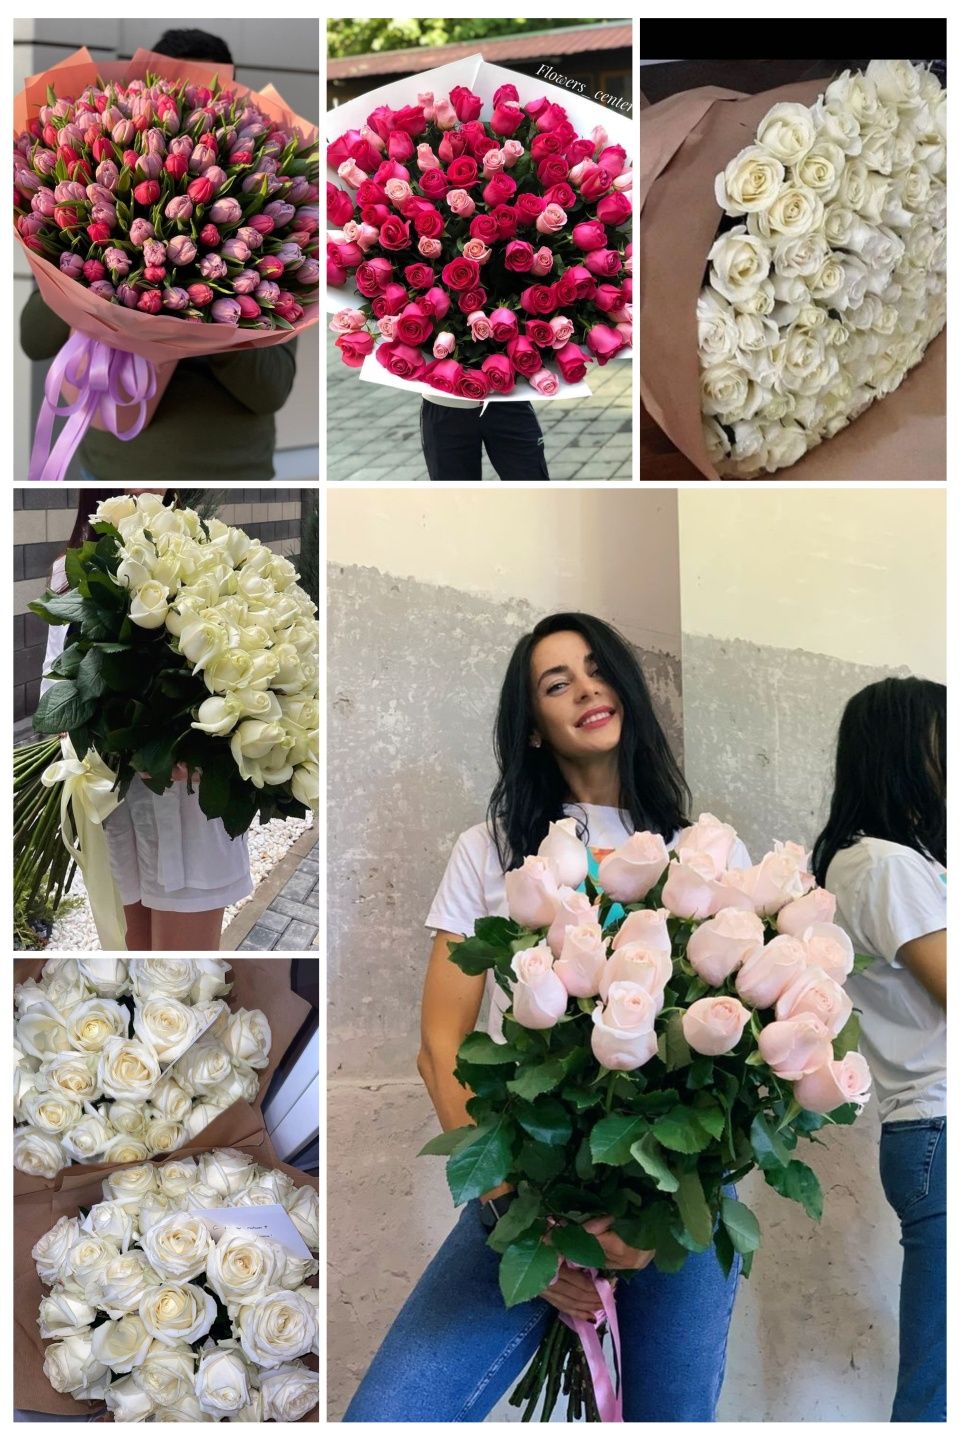 Доставка тюльпаны розы к празднику цветы букеты